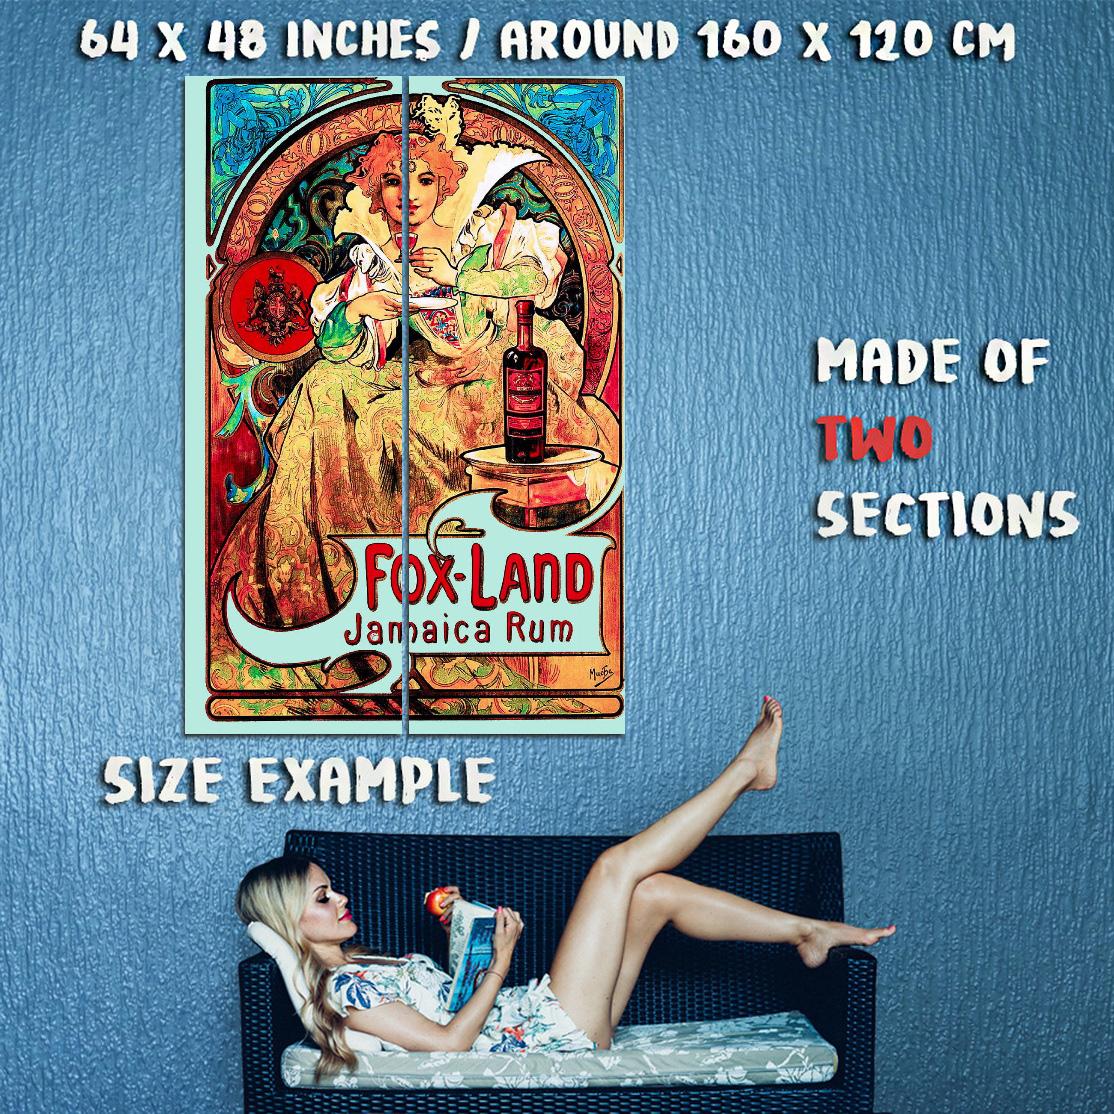 96968 Fox Land Jamaica Rum French Nouveau Caribbean Decor Wall Print Poster